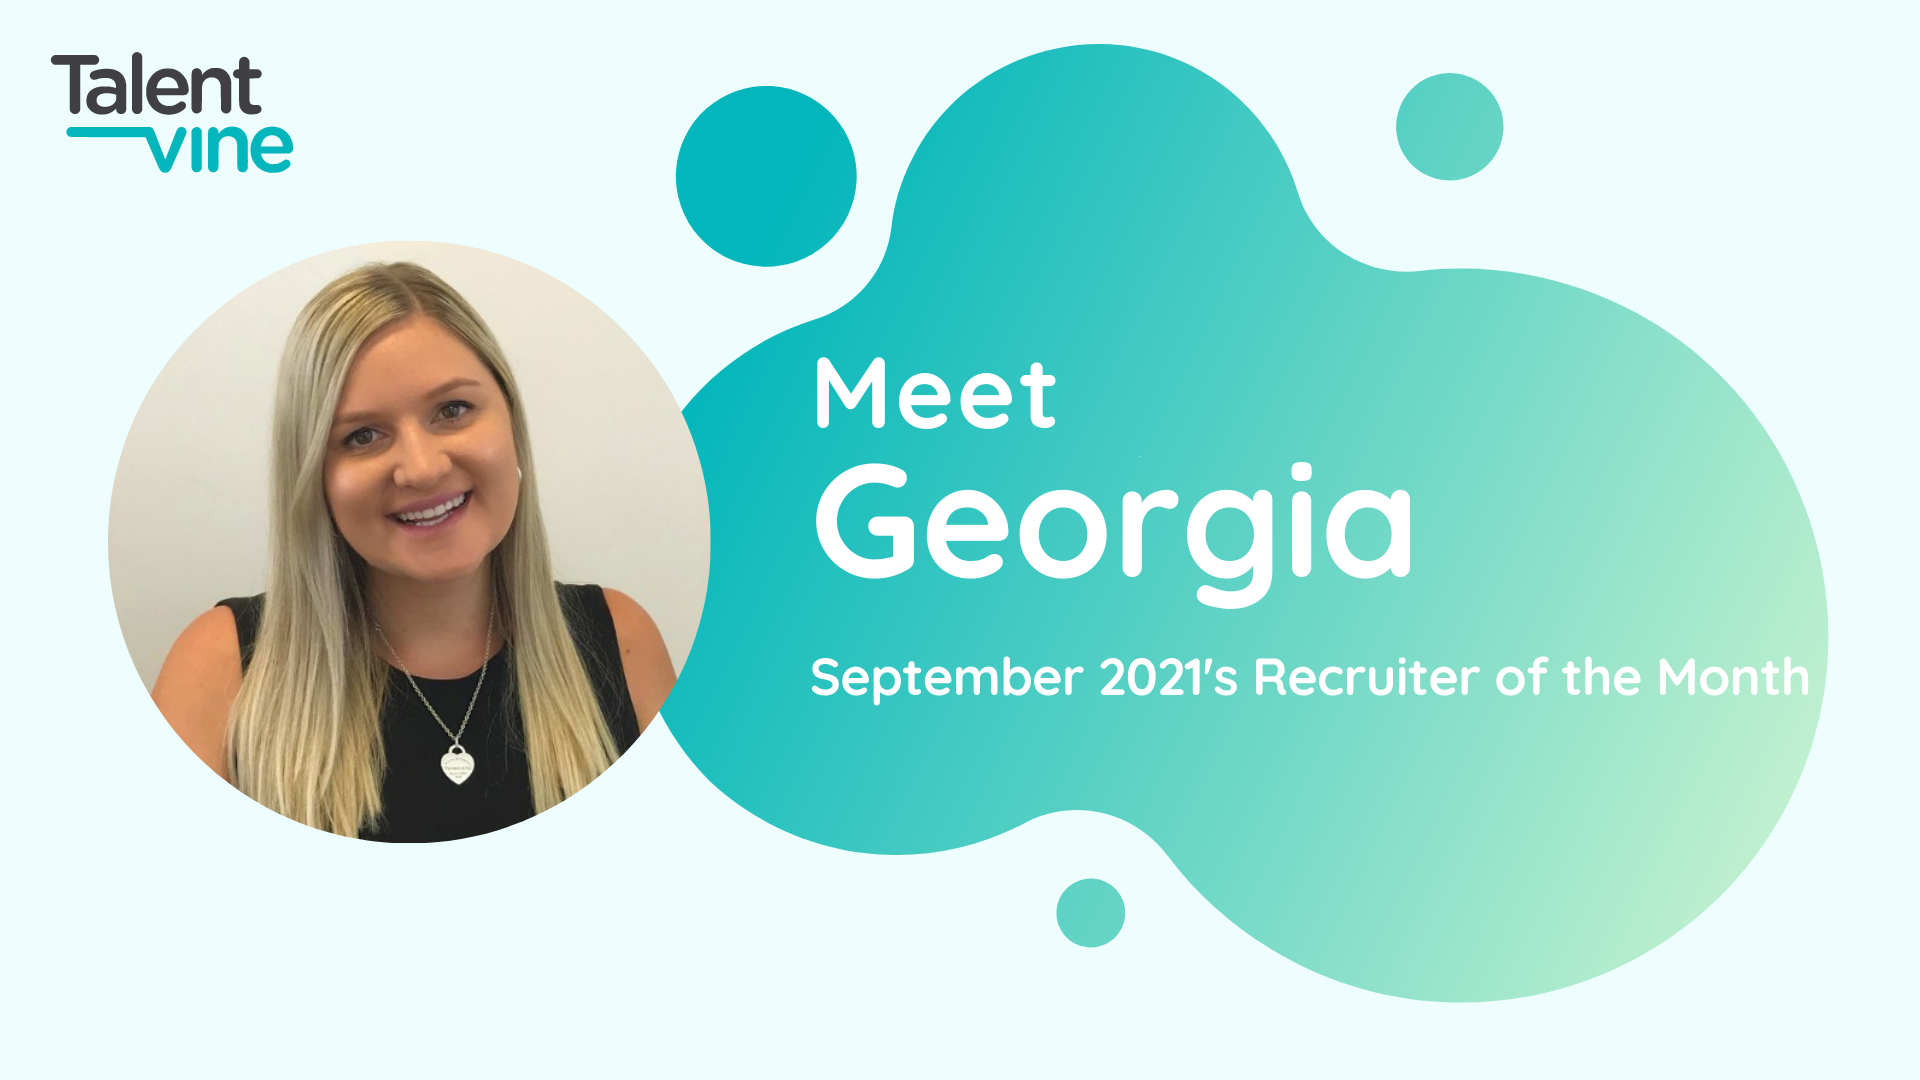 Meet Georgia - Recruiter of the Month